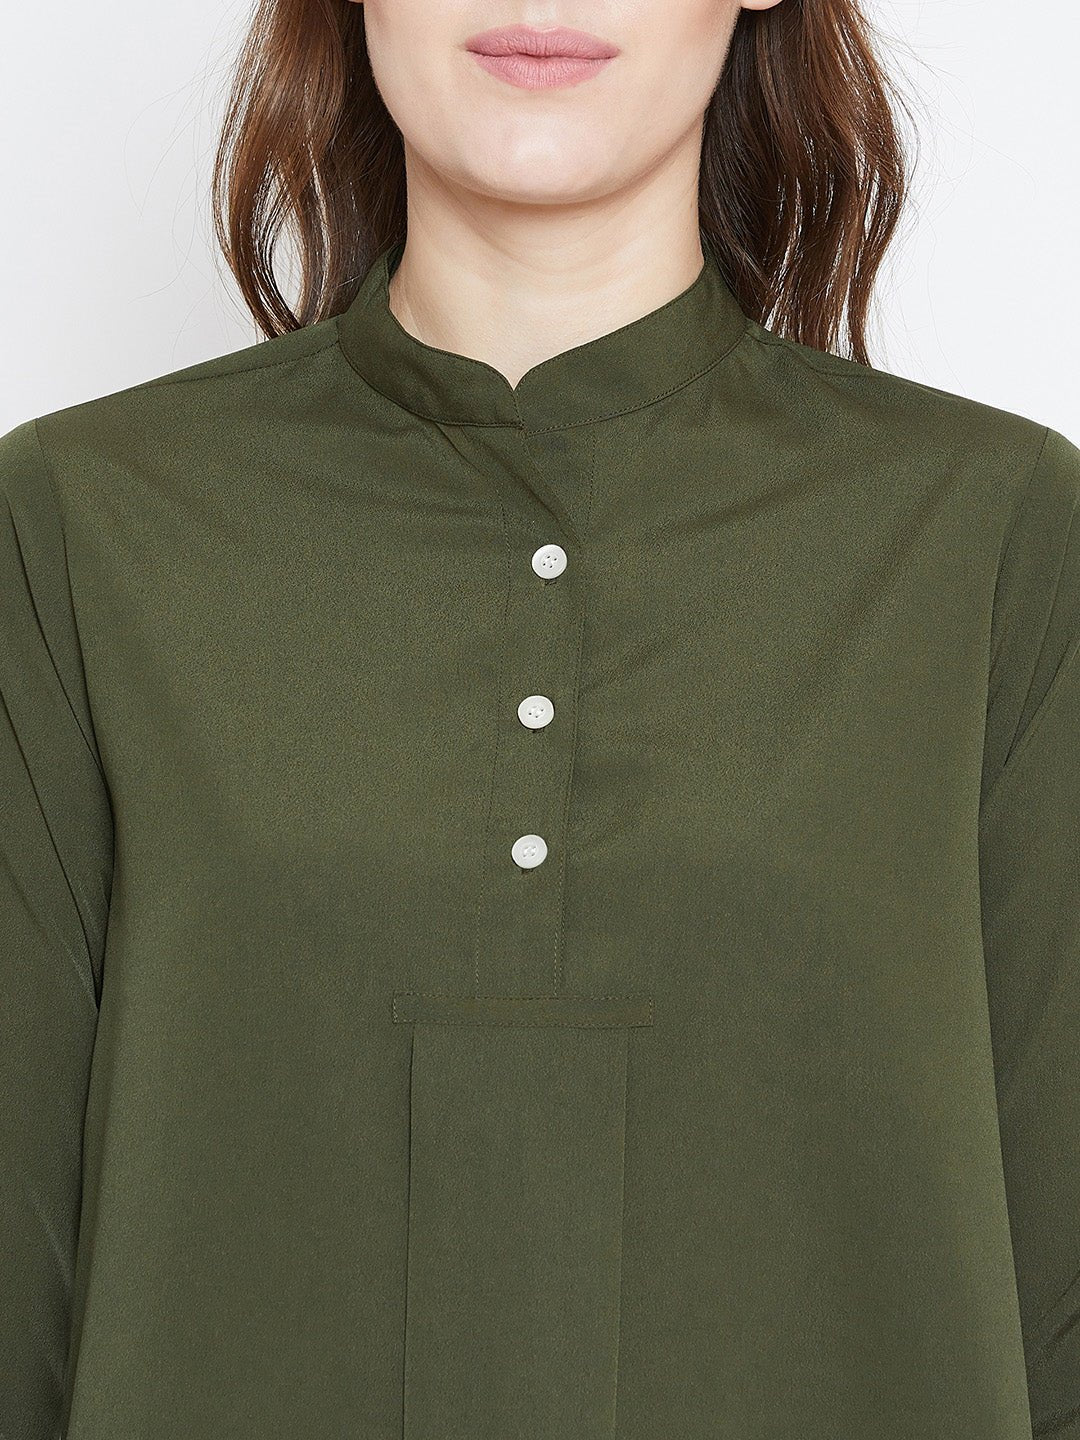 Folk Republic Women Solid Olive Green Mandarin Collar High-Low Longline Top - #folk republic#